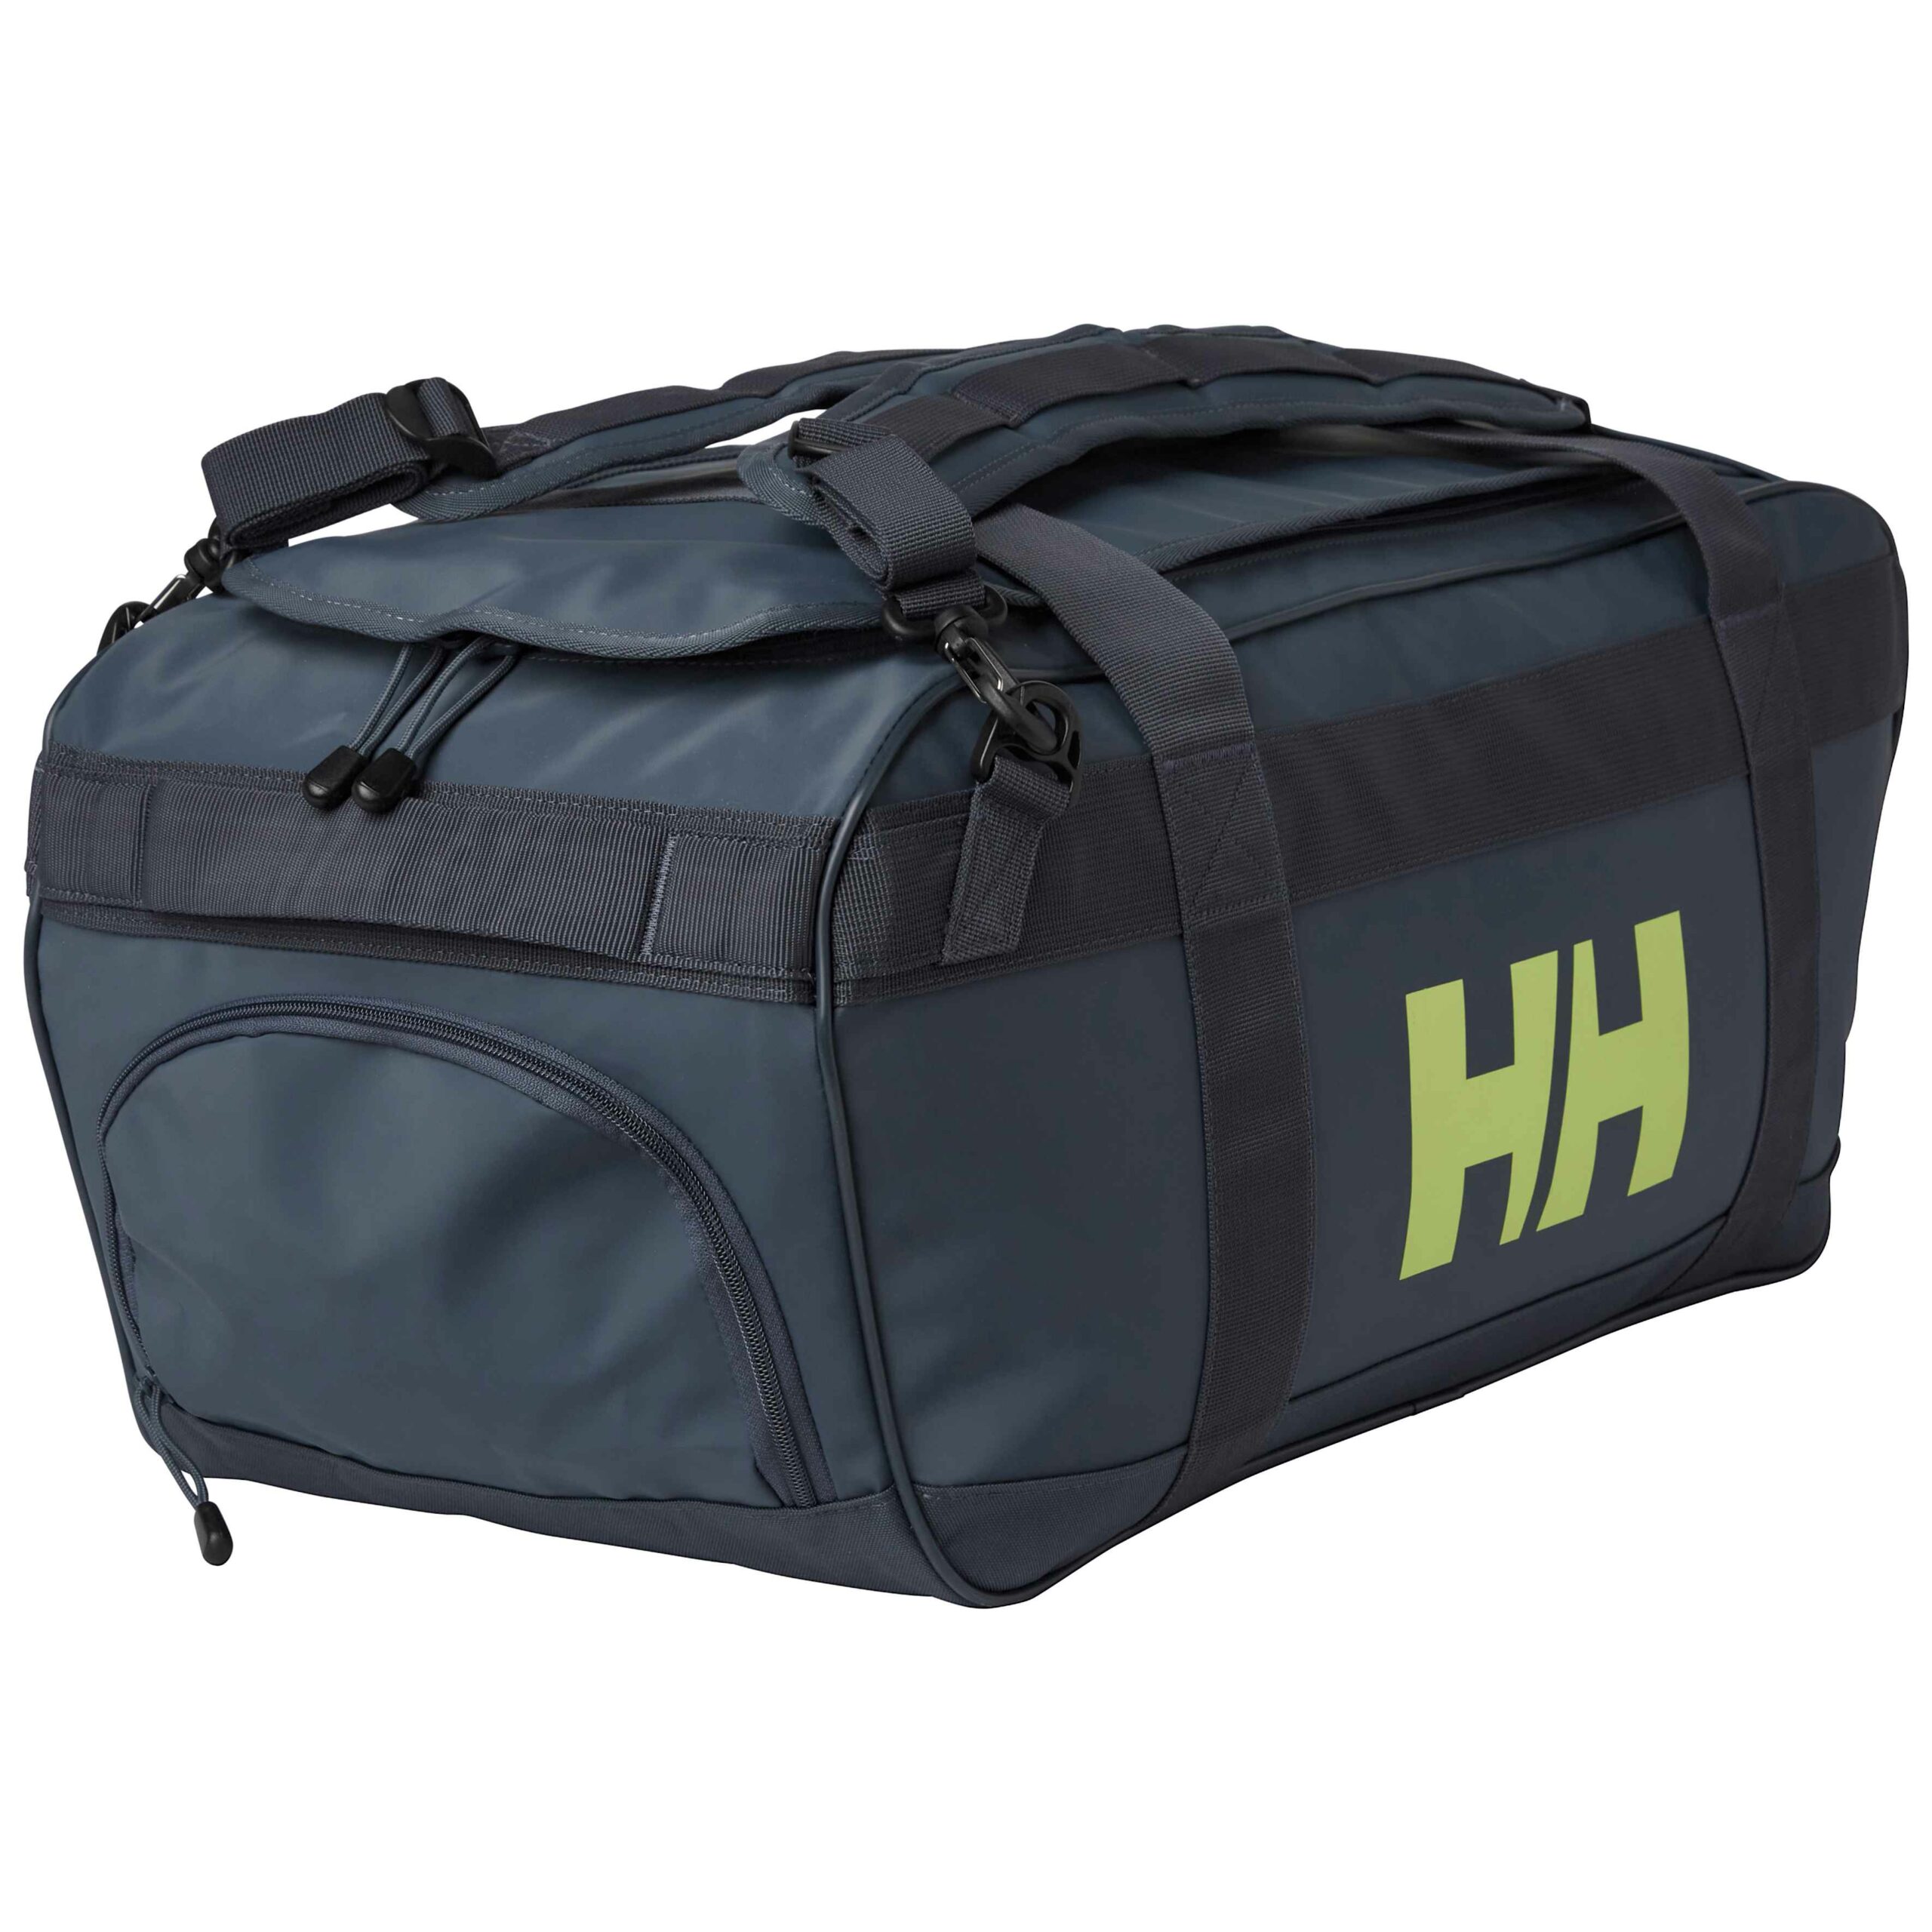 Helly Hansen Duffel Bag: Light Weight Unisex, Multiple Sizes and